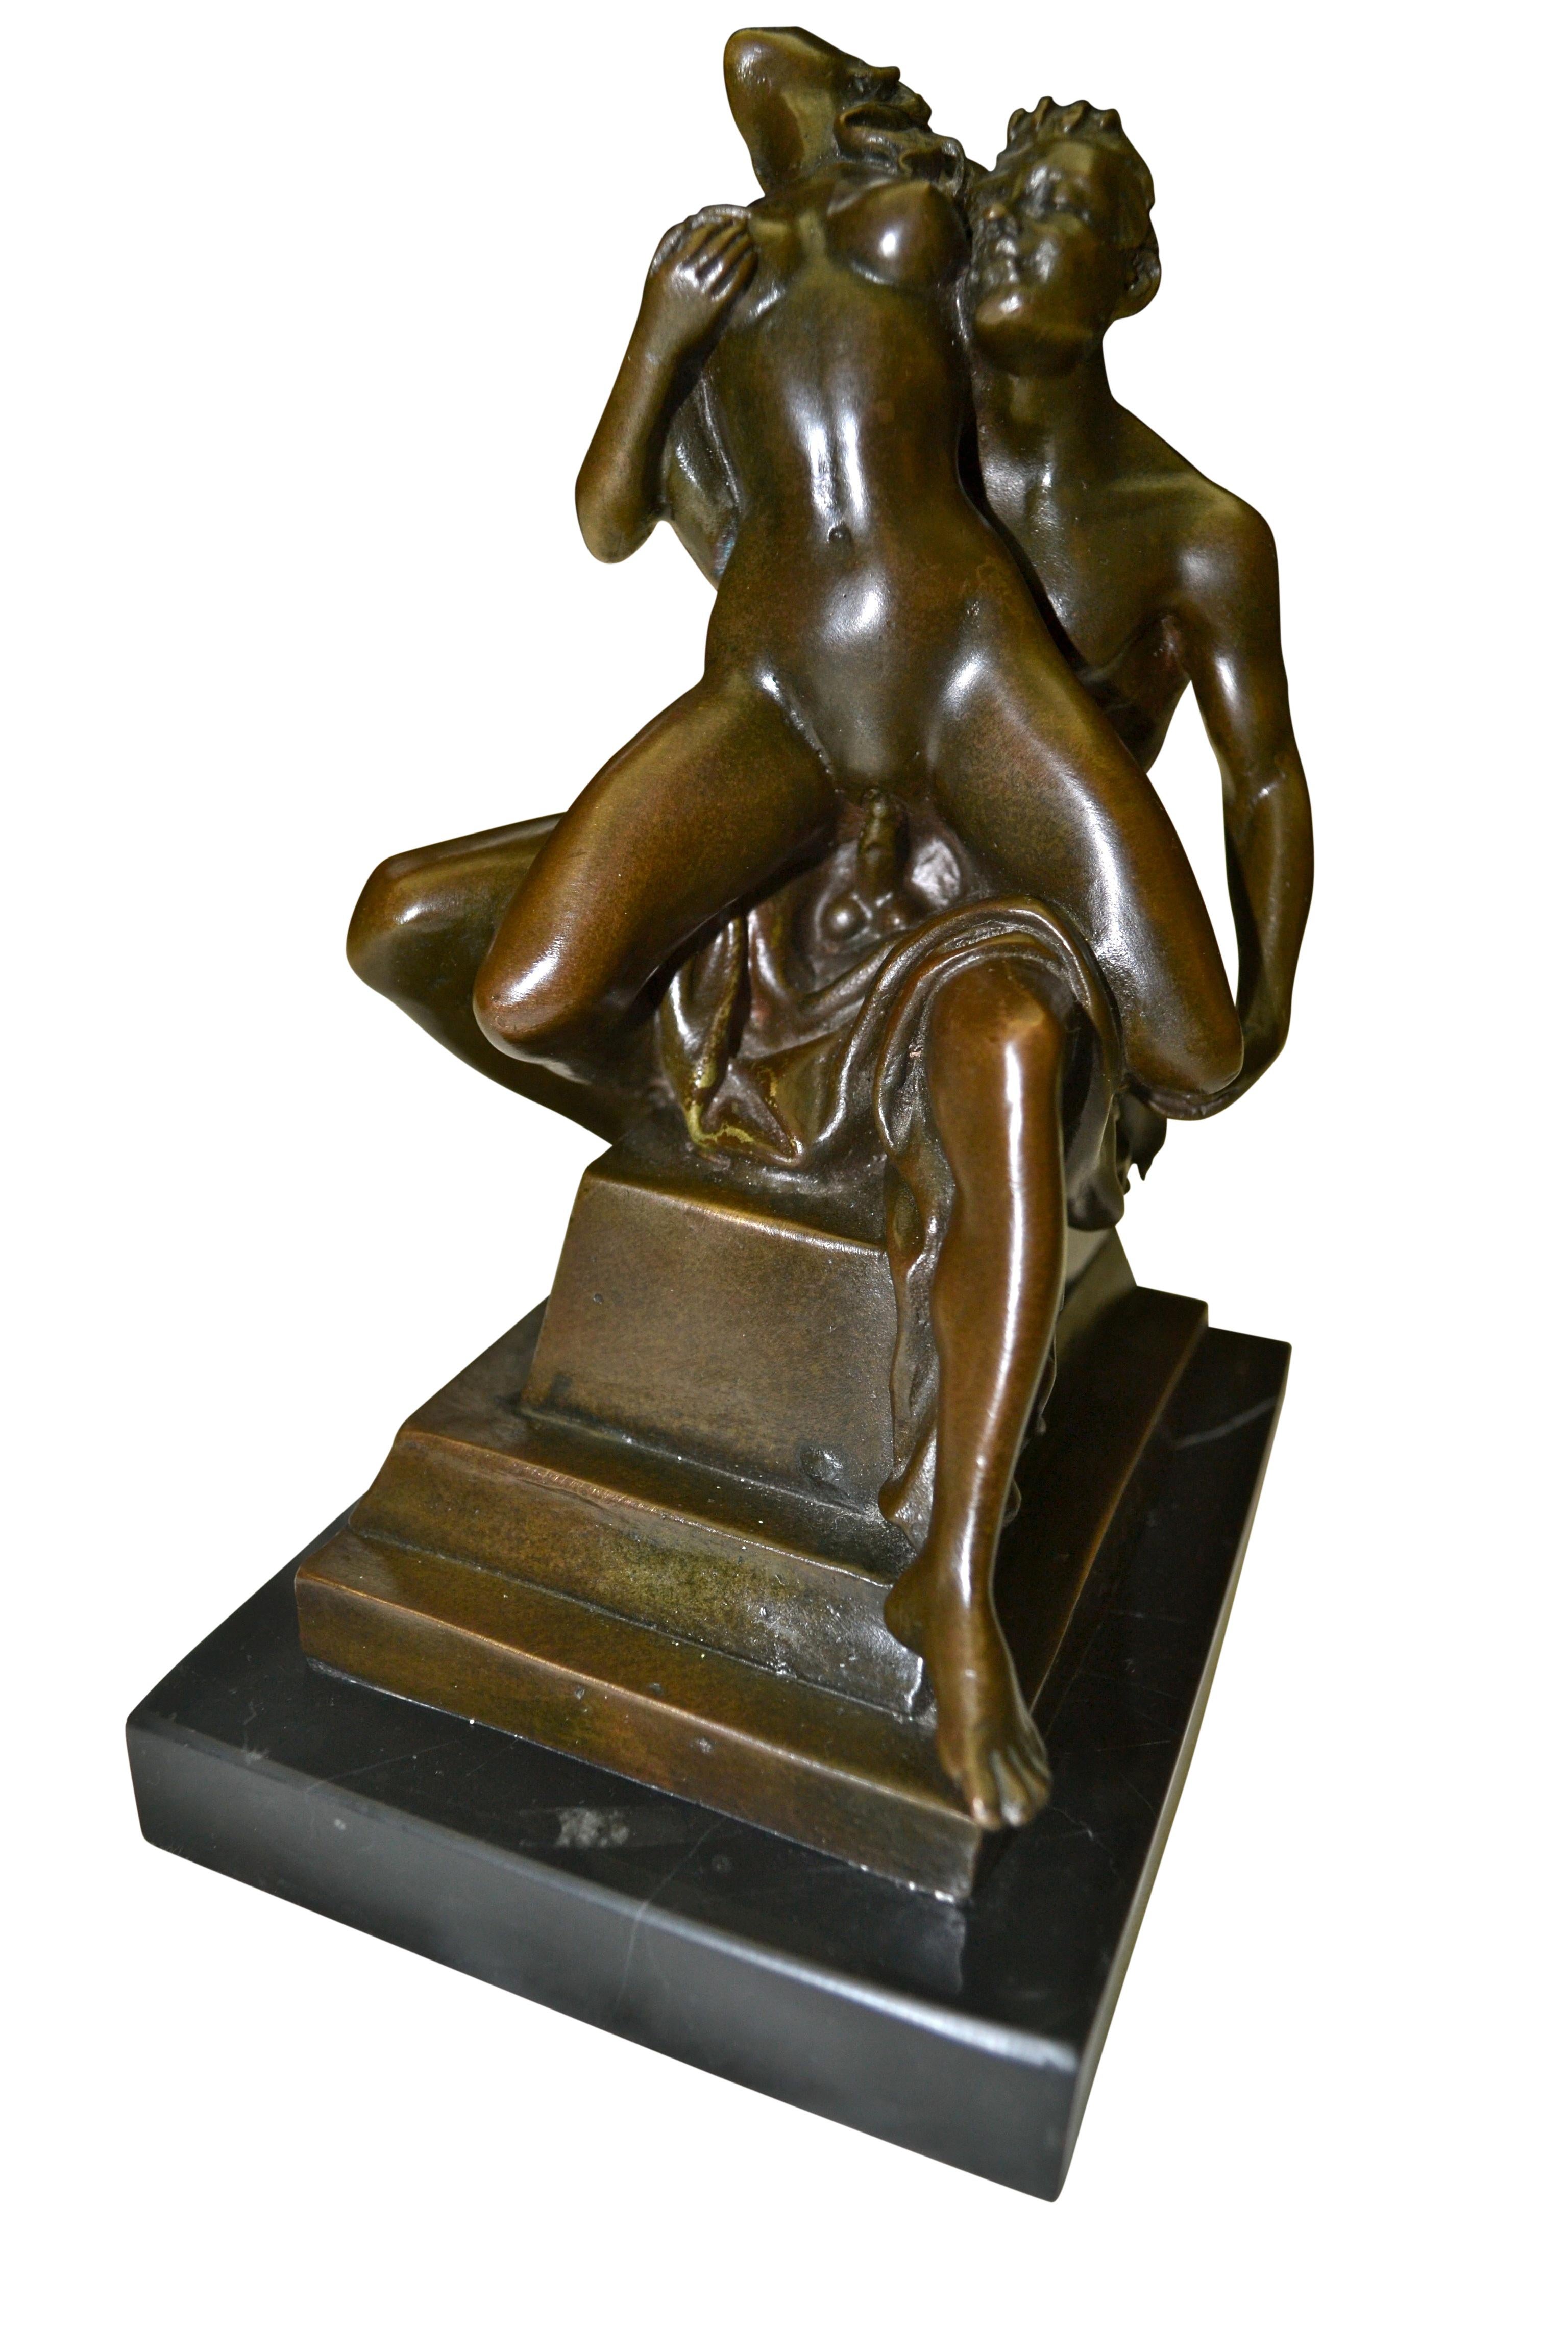 Austrian Erotic Patinated Bronze Sculpture after Bruno Zach, Austria